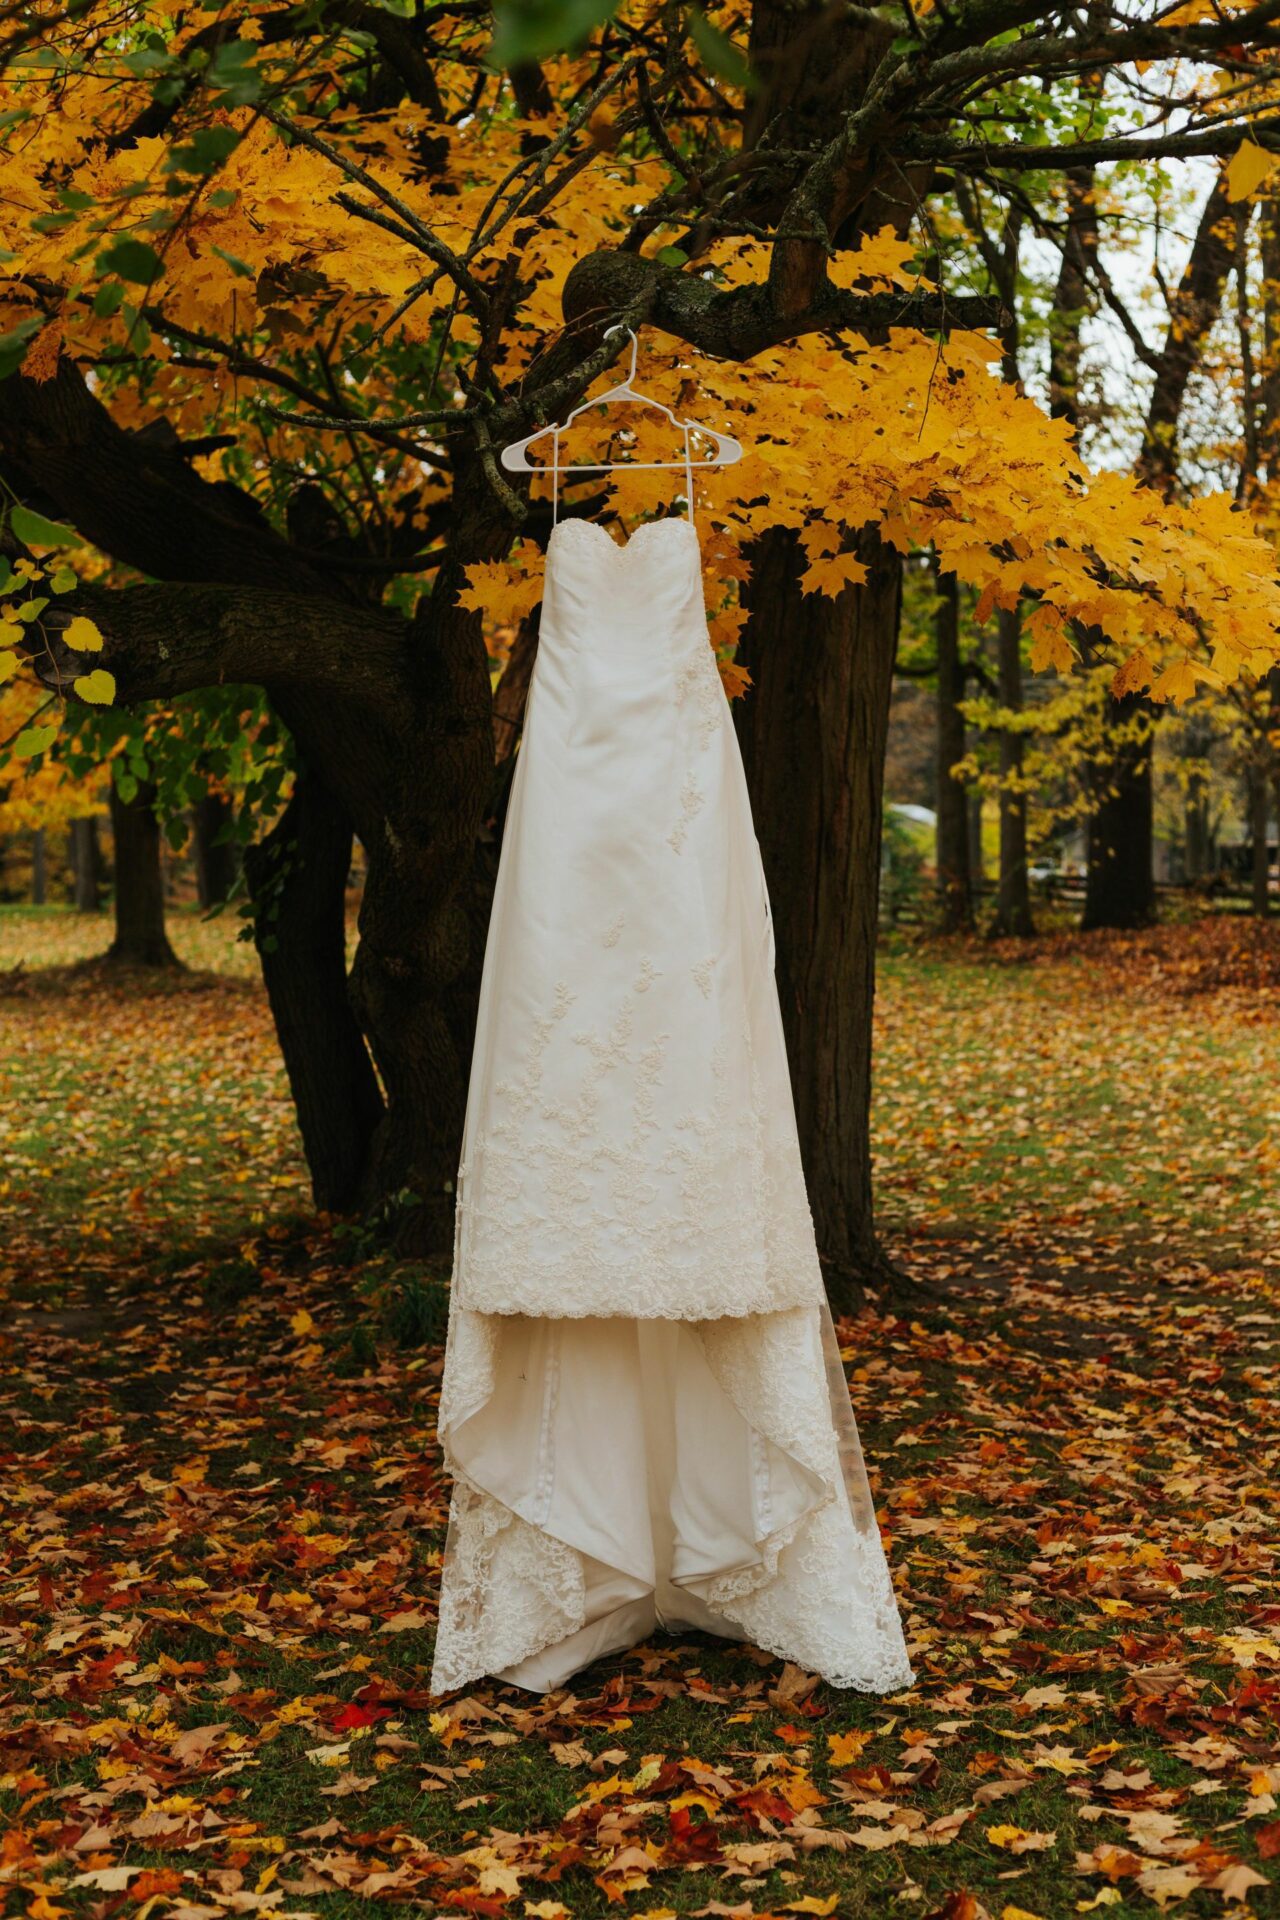 White dress hung on an Autumn tree